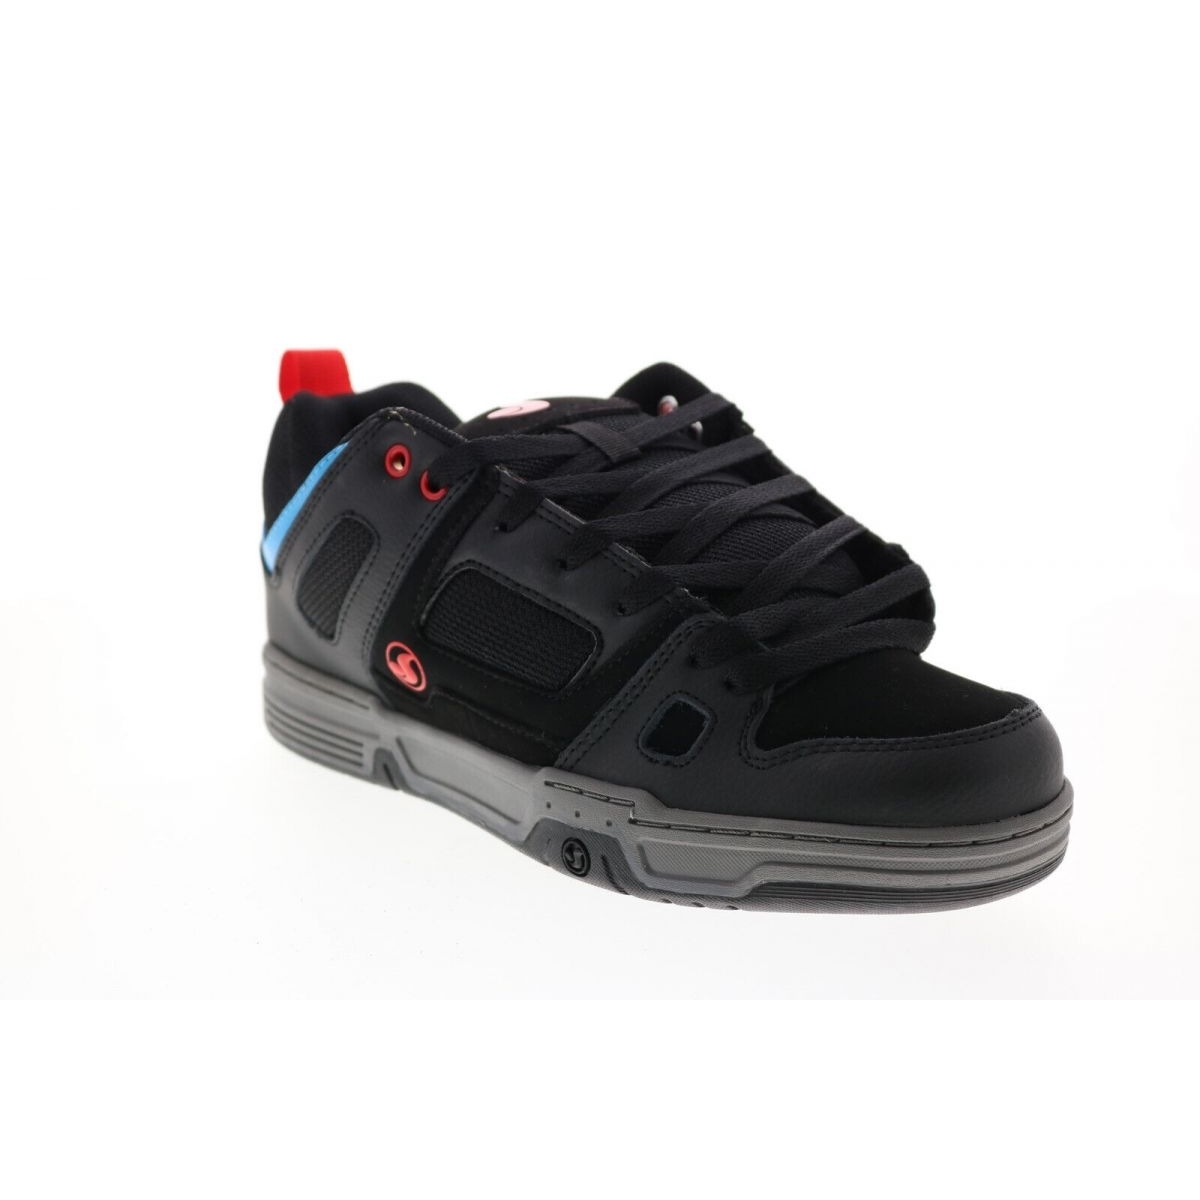 DVS Men's Gambol Skate Shoe 0 BLACK FIERY RED BLUE NUBUCK - BLACK FIERY RED BLUE NUBUCK, 7.5